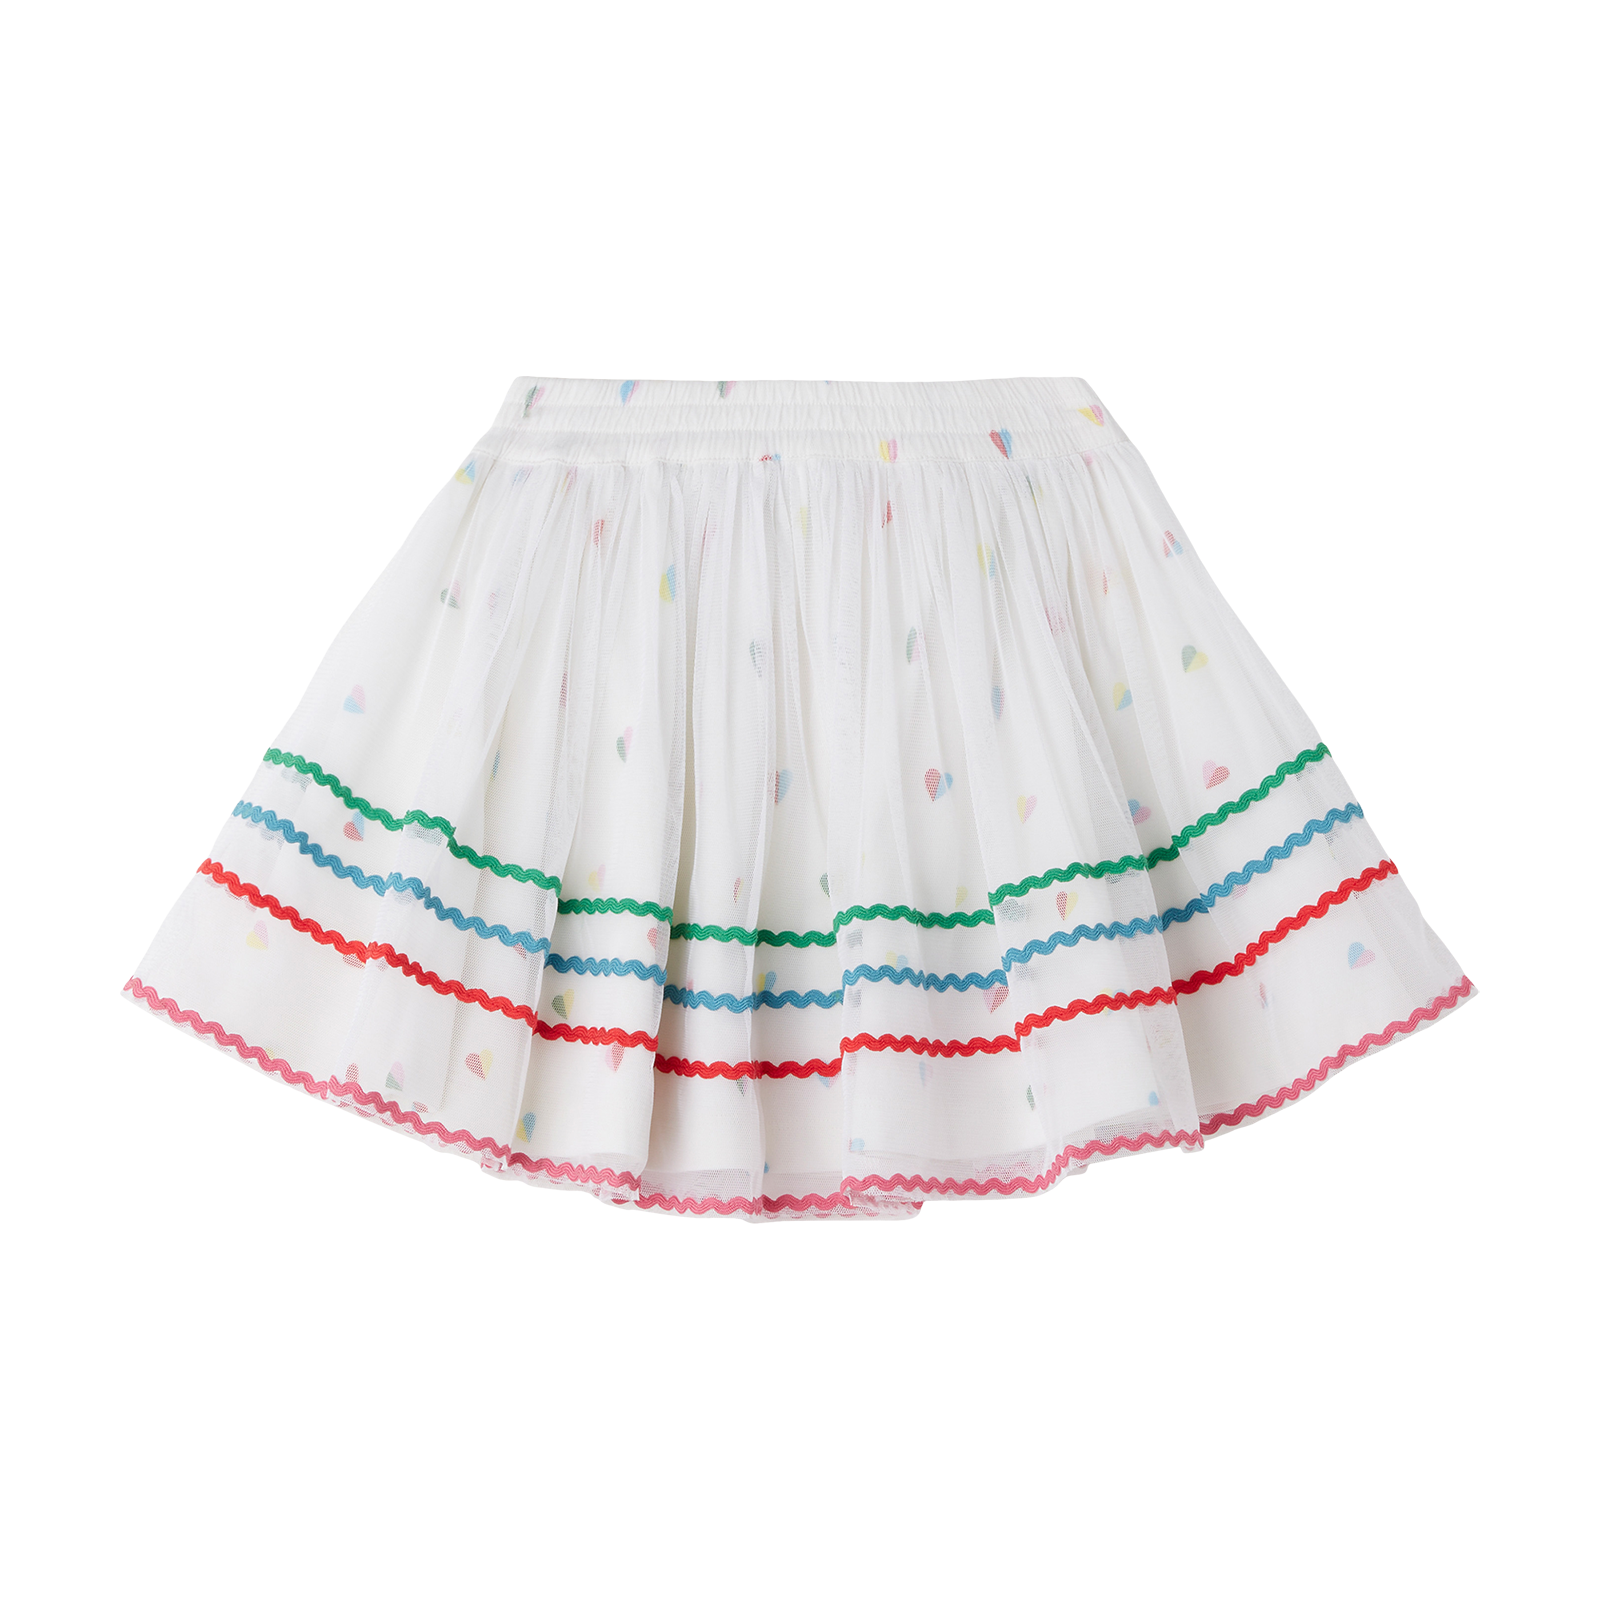 Skirt 4 Ivory/colourful